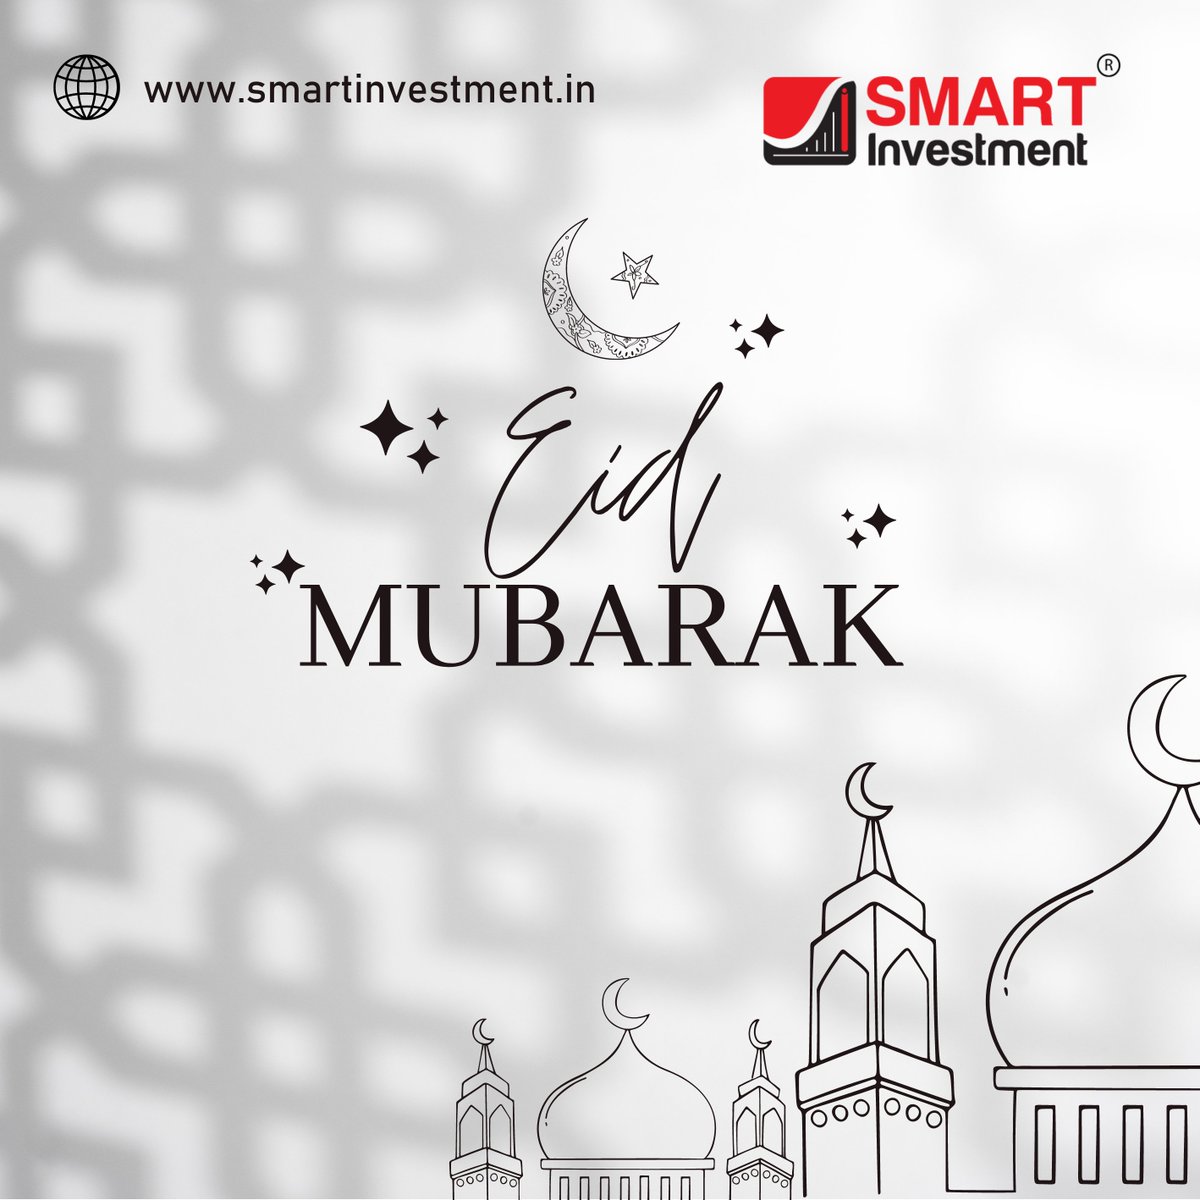 Eid Mubarak
.
Follow For More
.
#stockmarket #smartinvestments #investing #newspaper